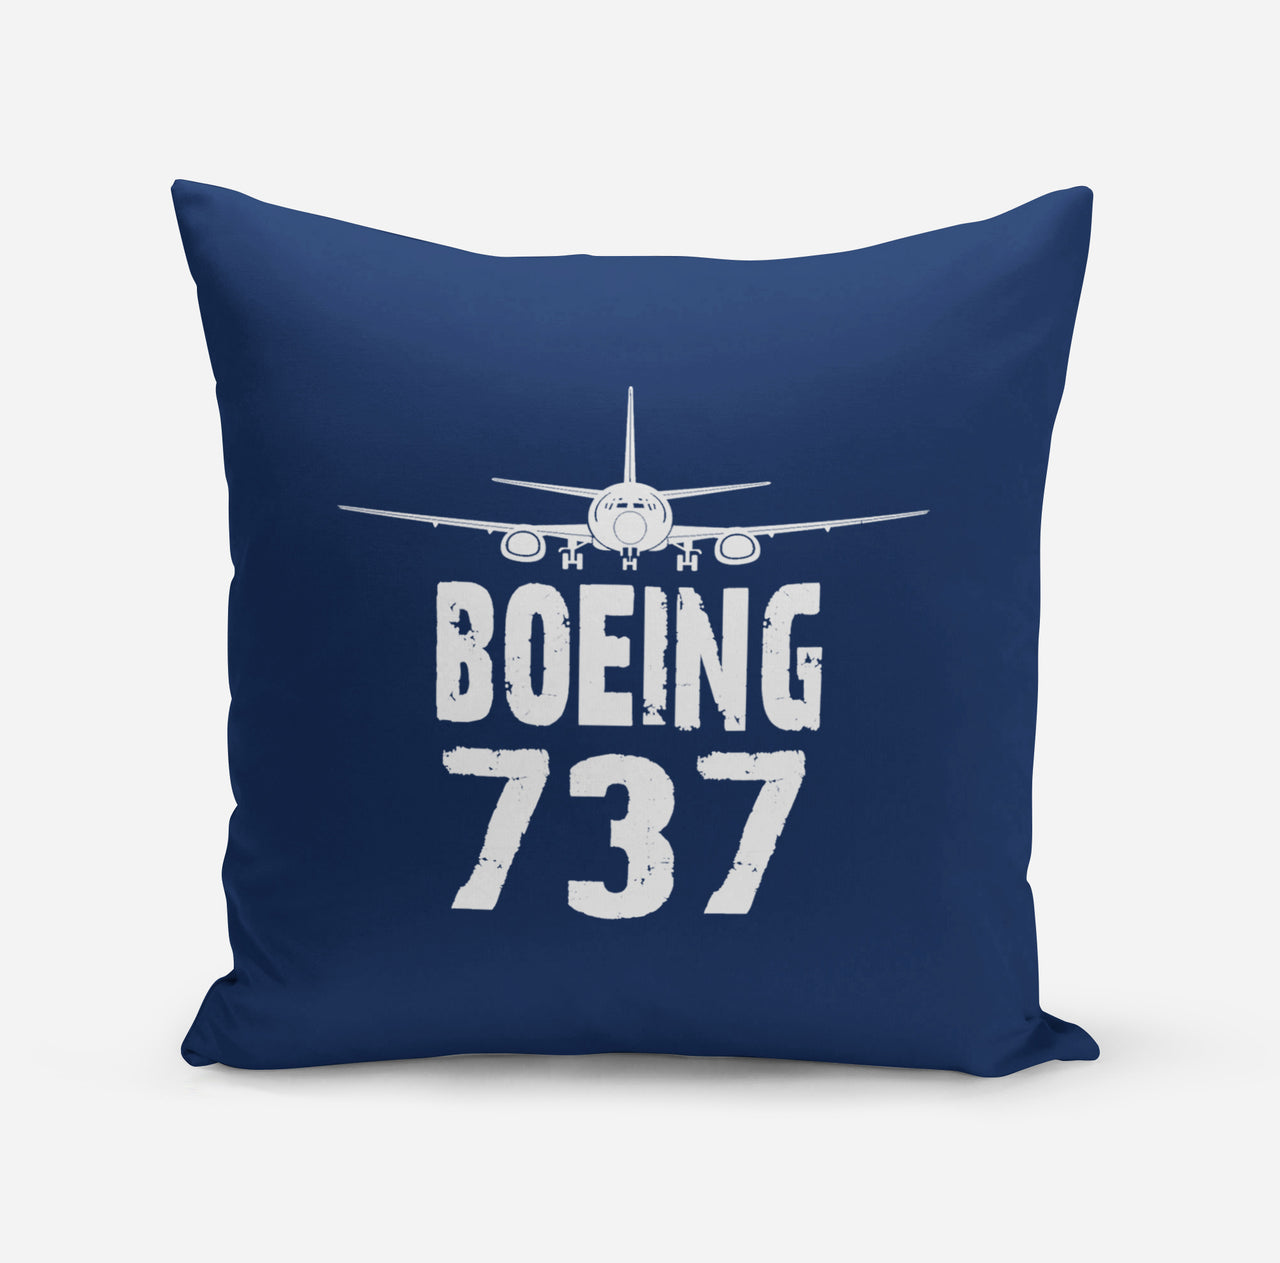 Boeing 737 & Plane Designed Pillows